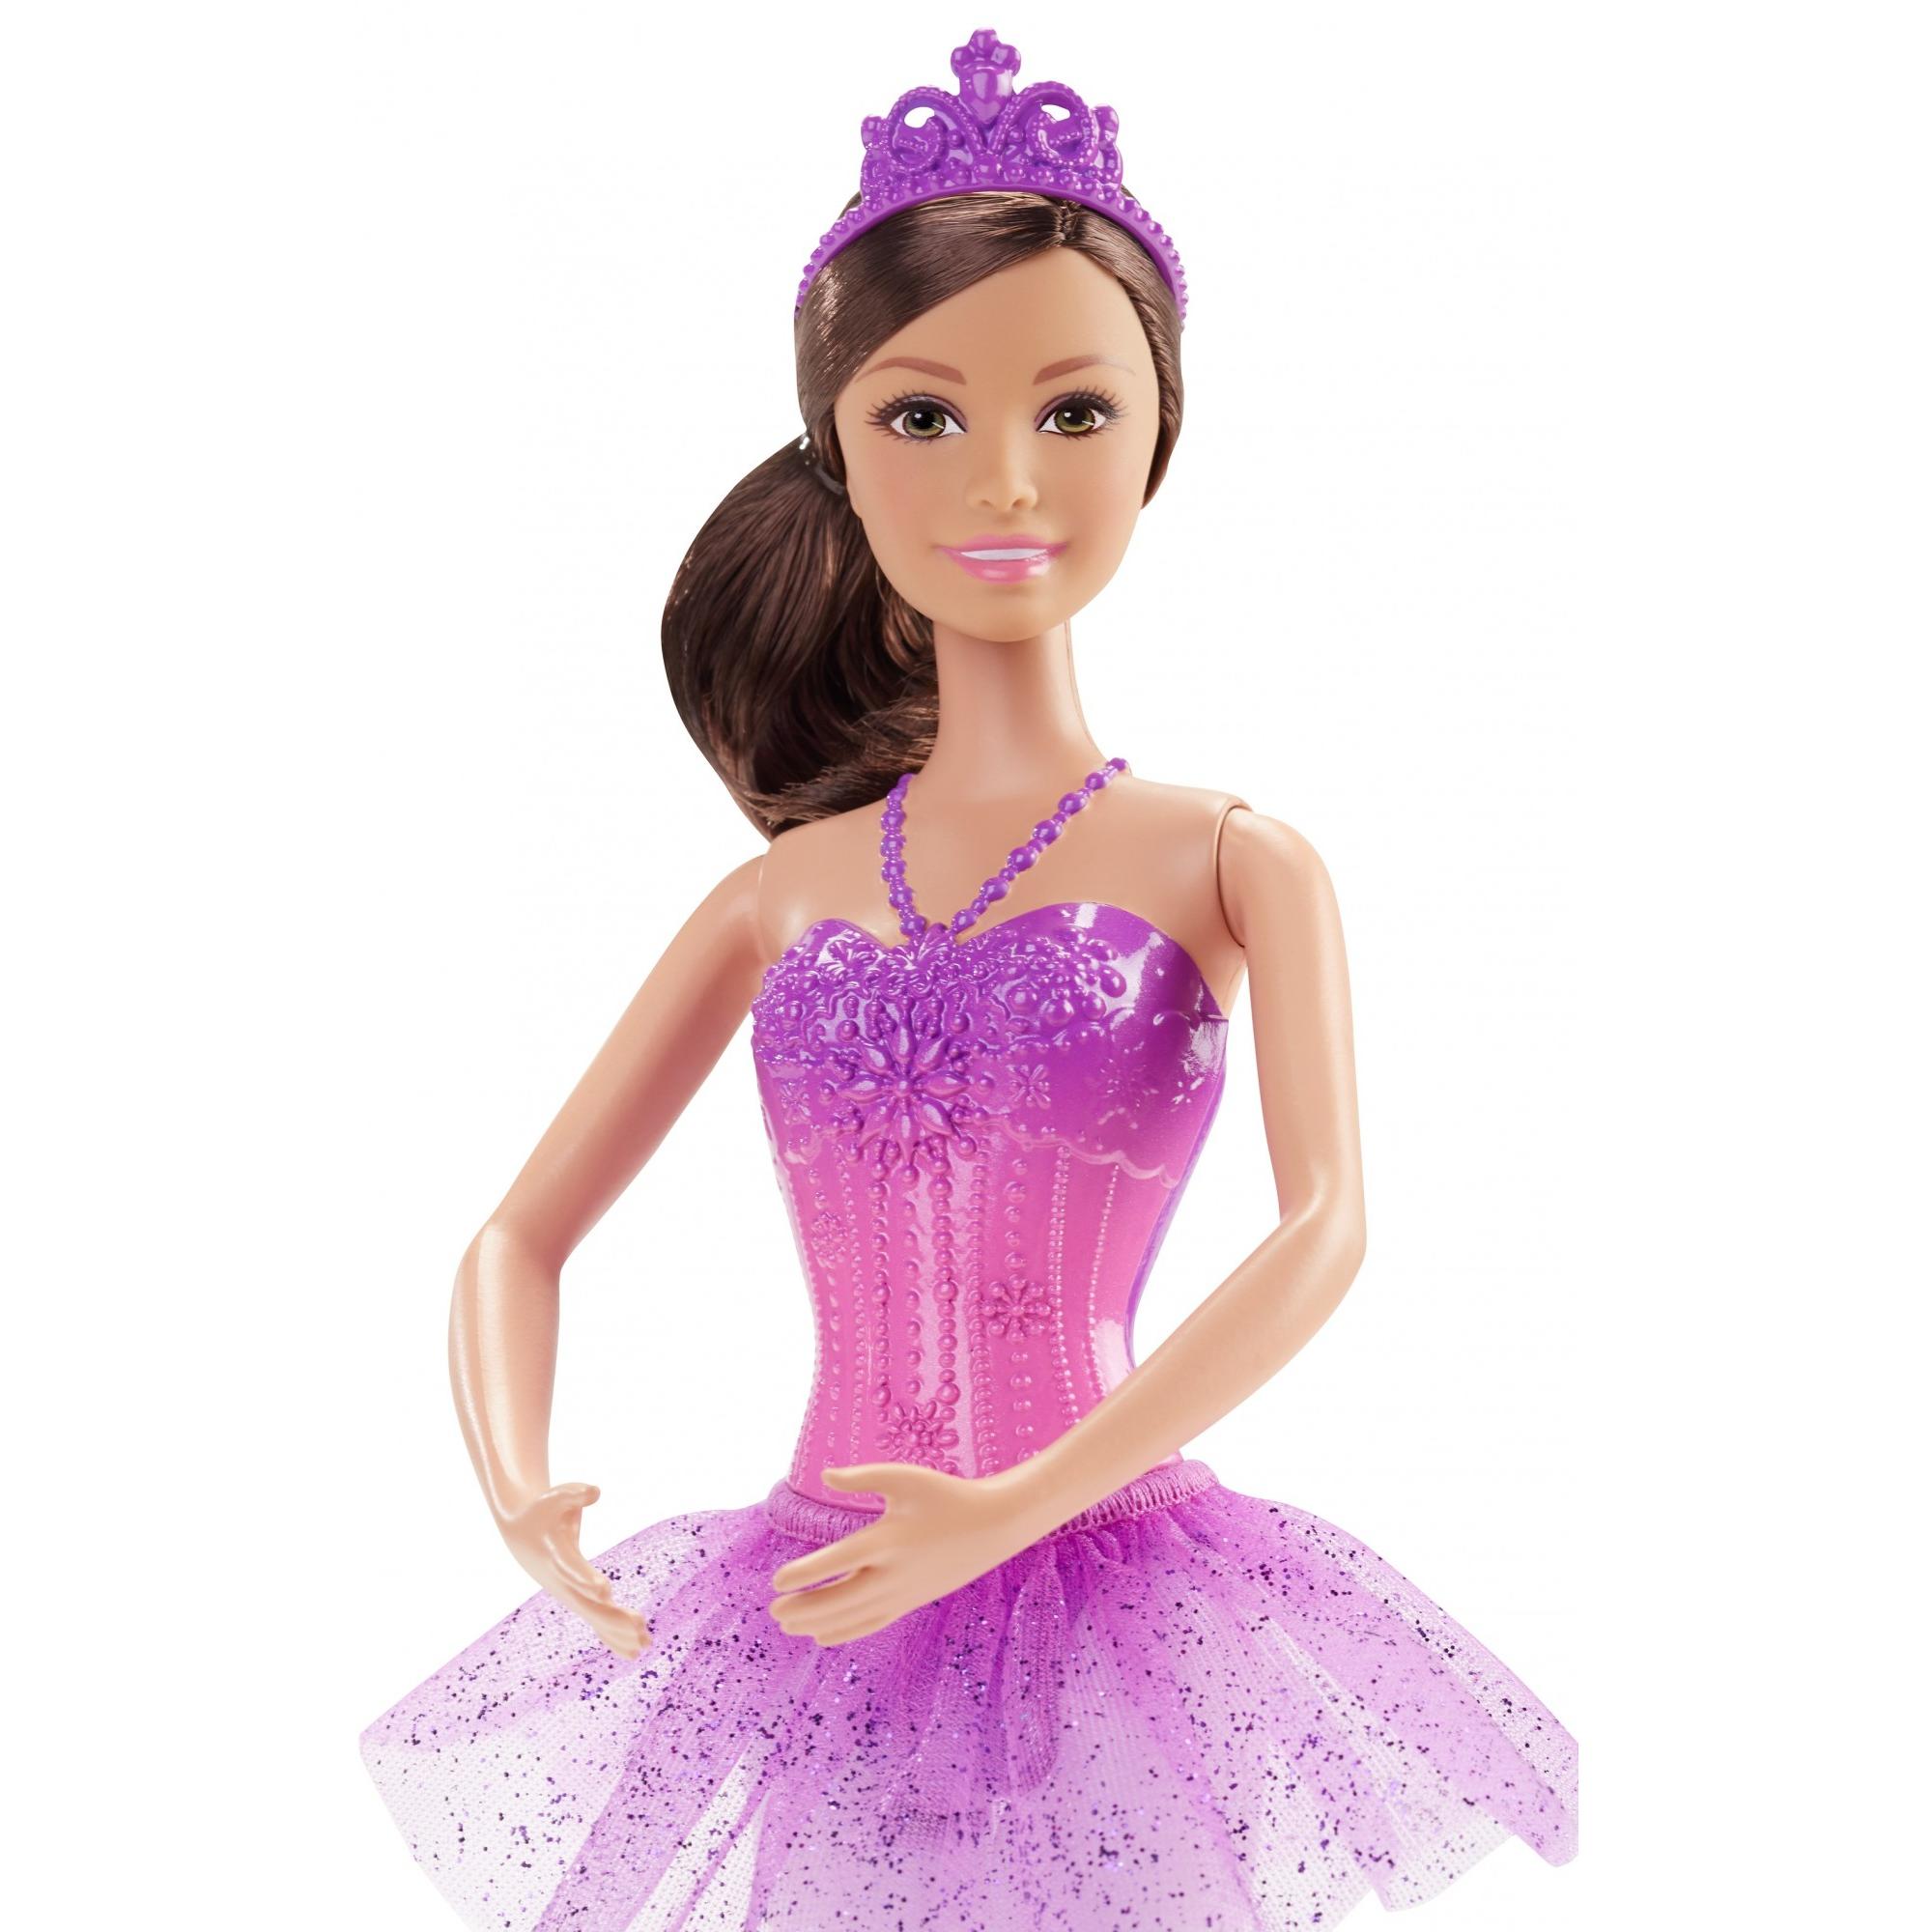 Barbie Ballerina Doll with Removable Purple Tutu & Tiara - image 5 of 6